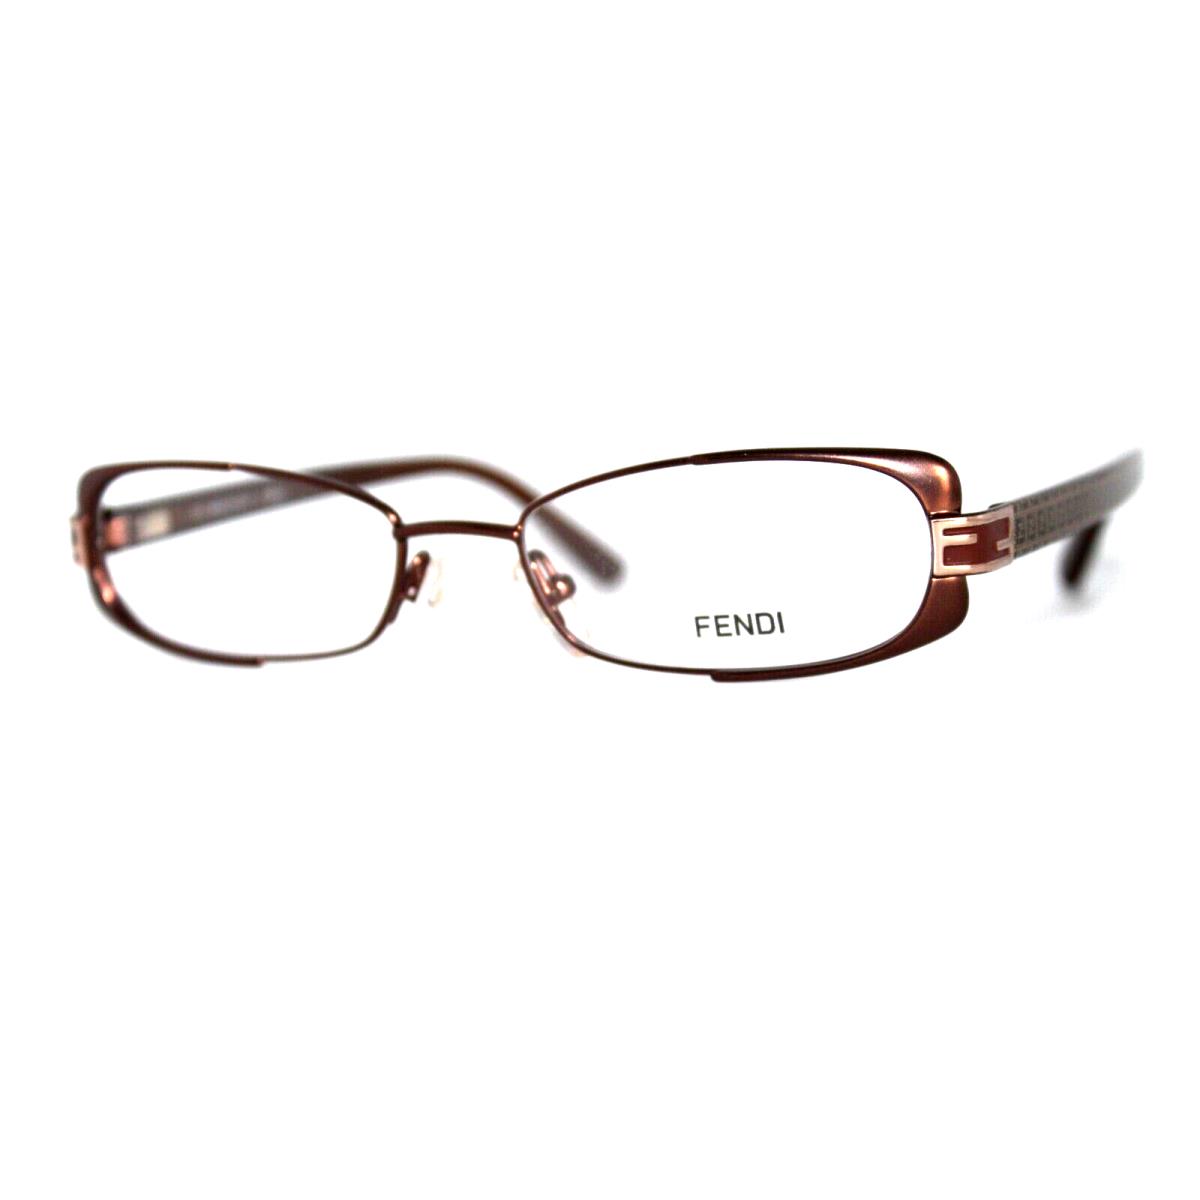 Fendi F943 208 Brown Mocha Eyeglasses Frames 49-16-135MM W/case - Frame: Brown